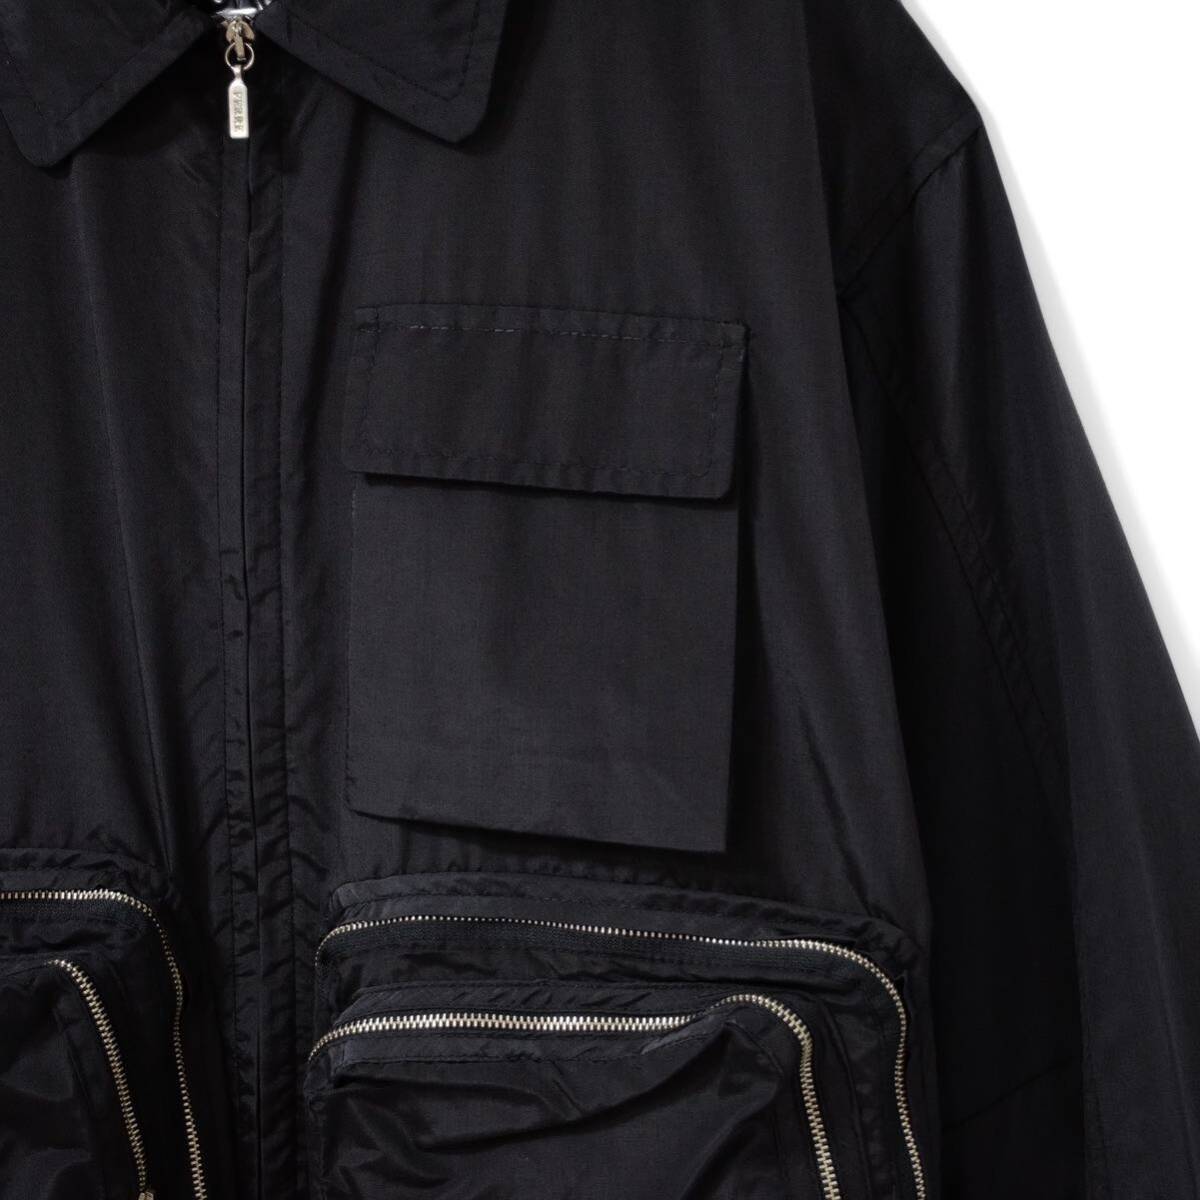 Gian Franco Ferre 90's detachable pockets bomber jacket free black vintage ジャンフランコフェレ コットンナイロン テック ブルゾン